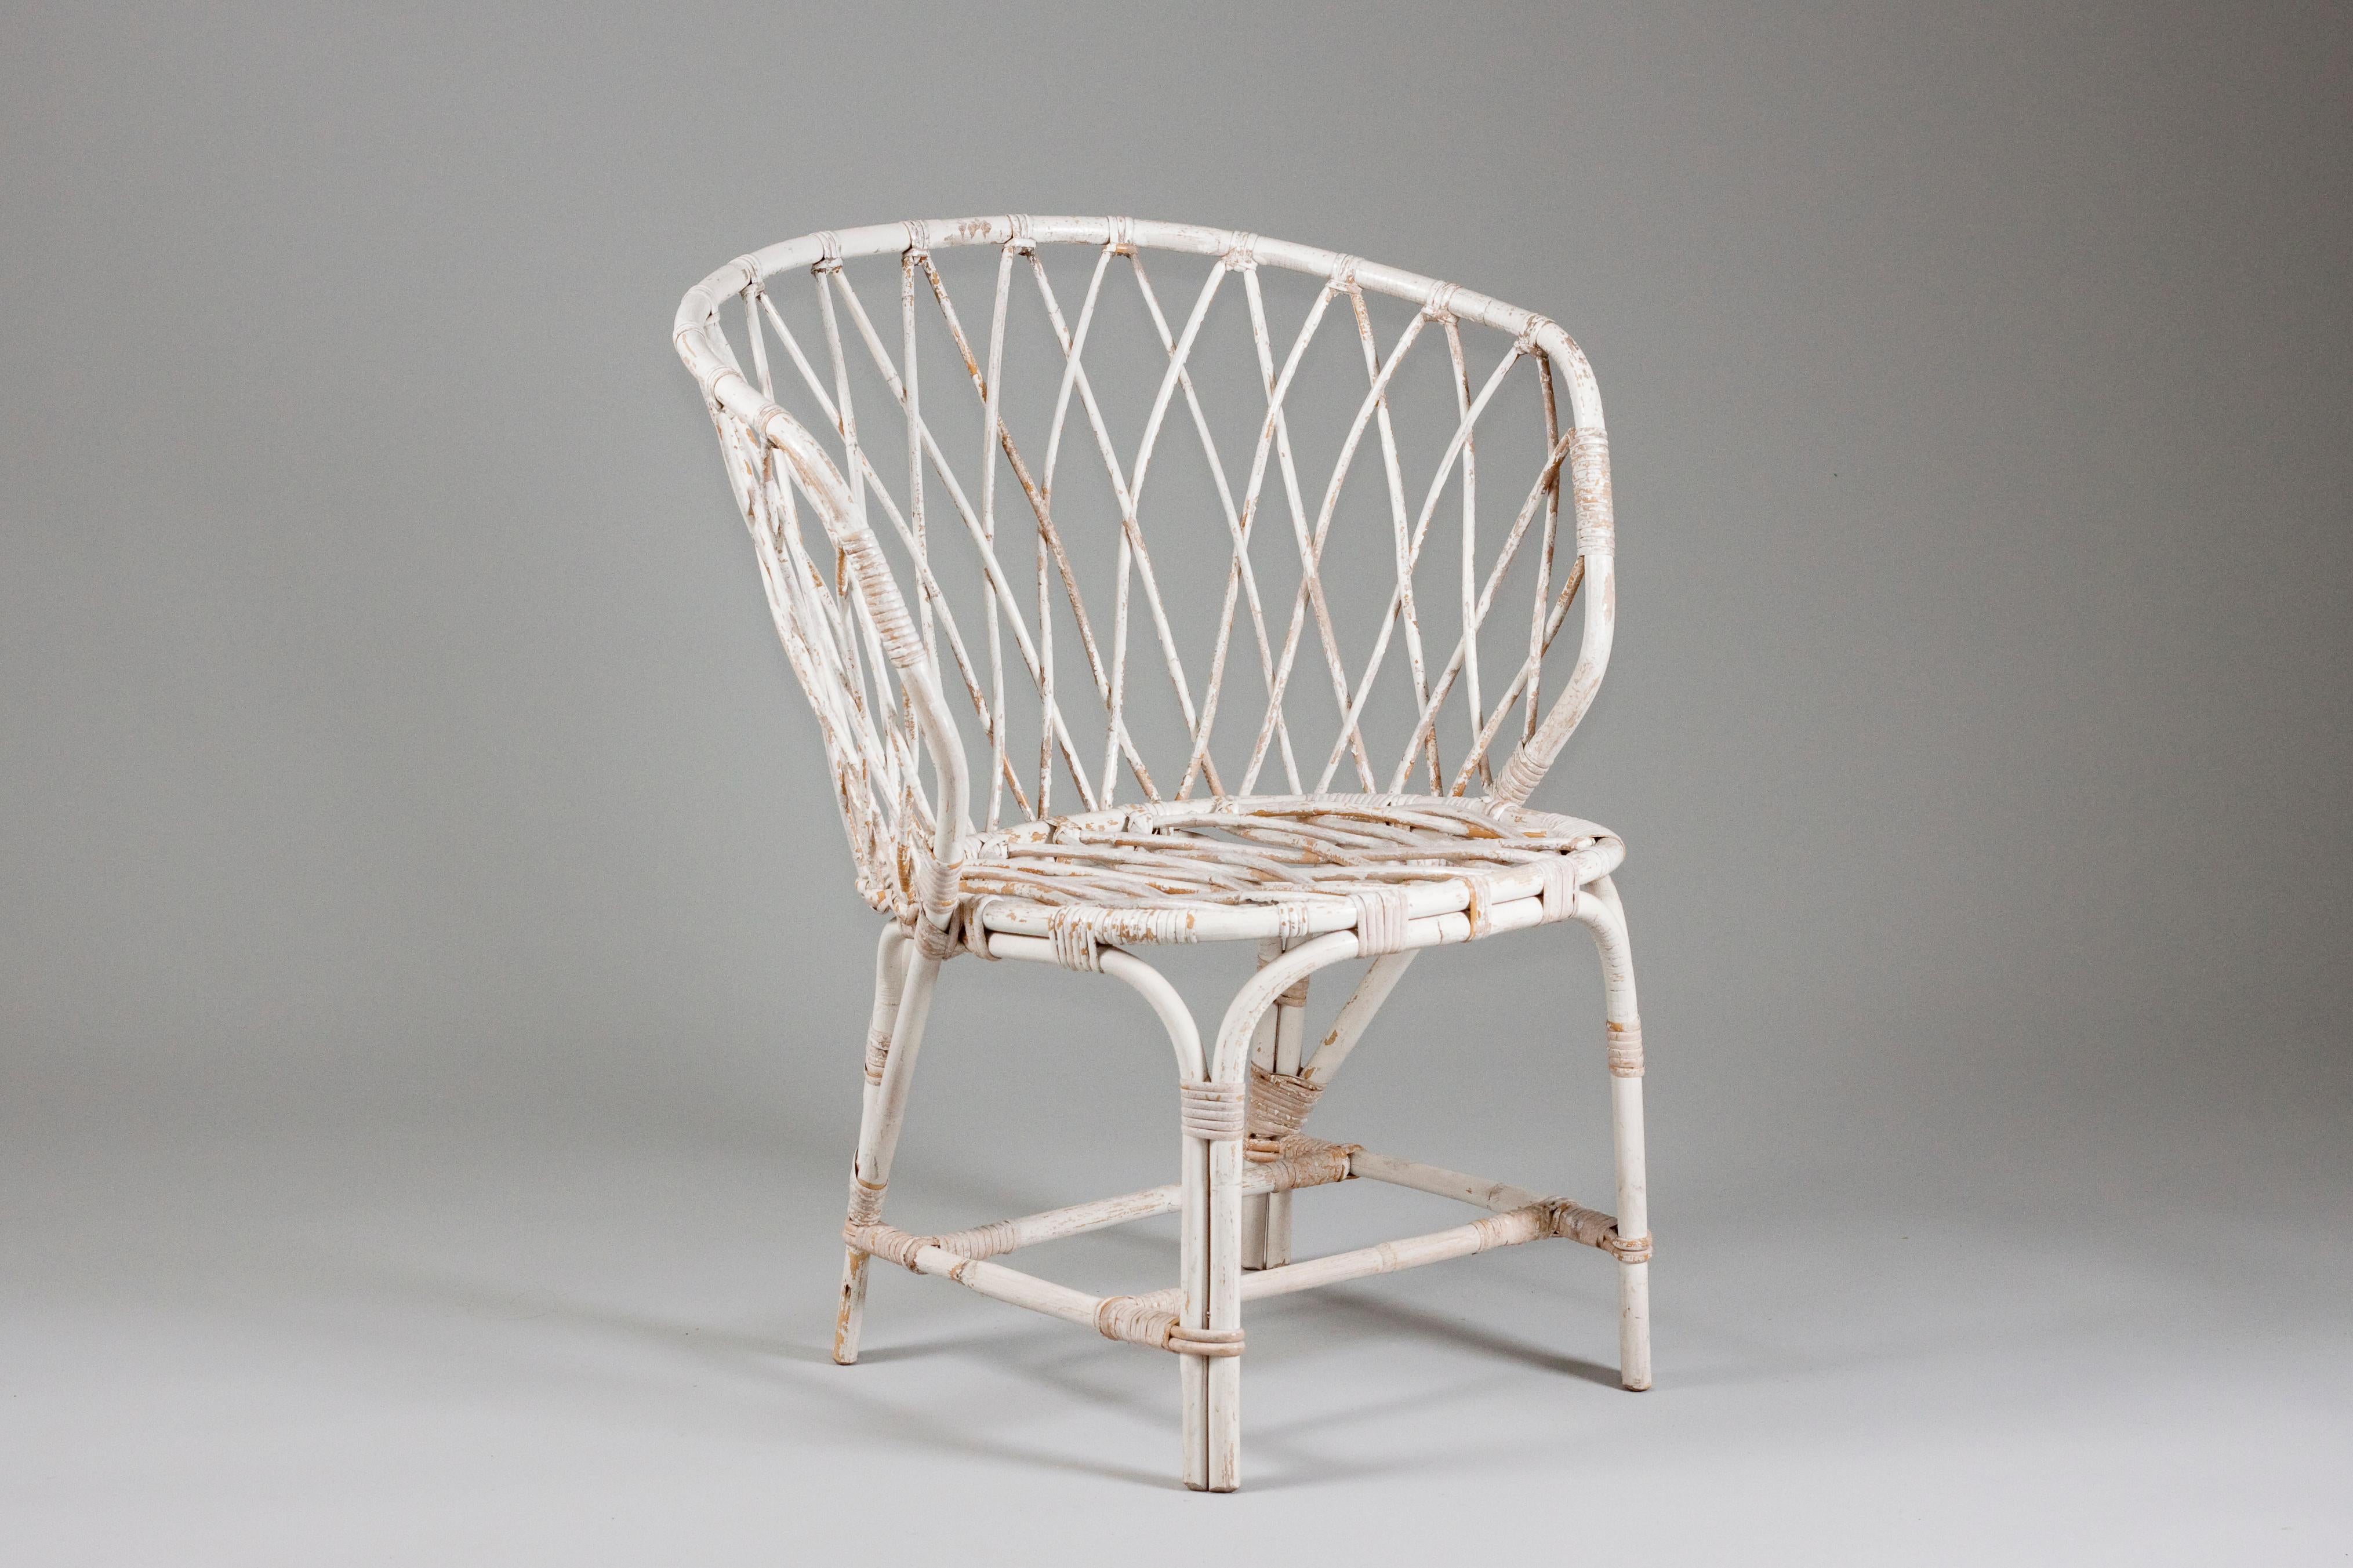 Hand-Crafted Pair of Mid-Century Modern Rattan Chairs by Maija Heikinheimo for Artek, Finland